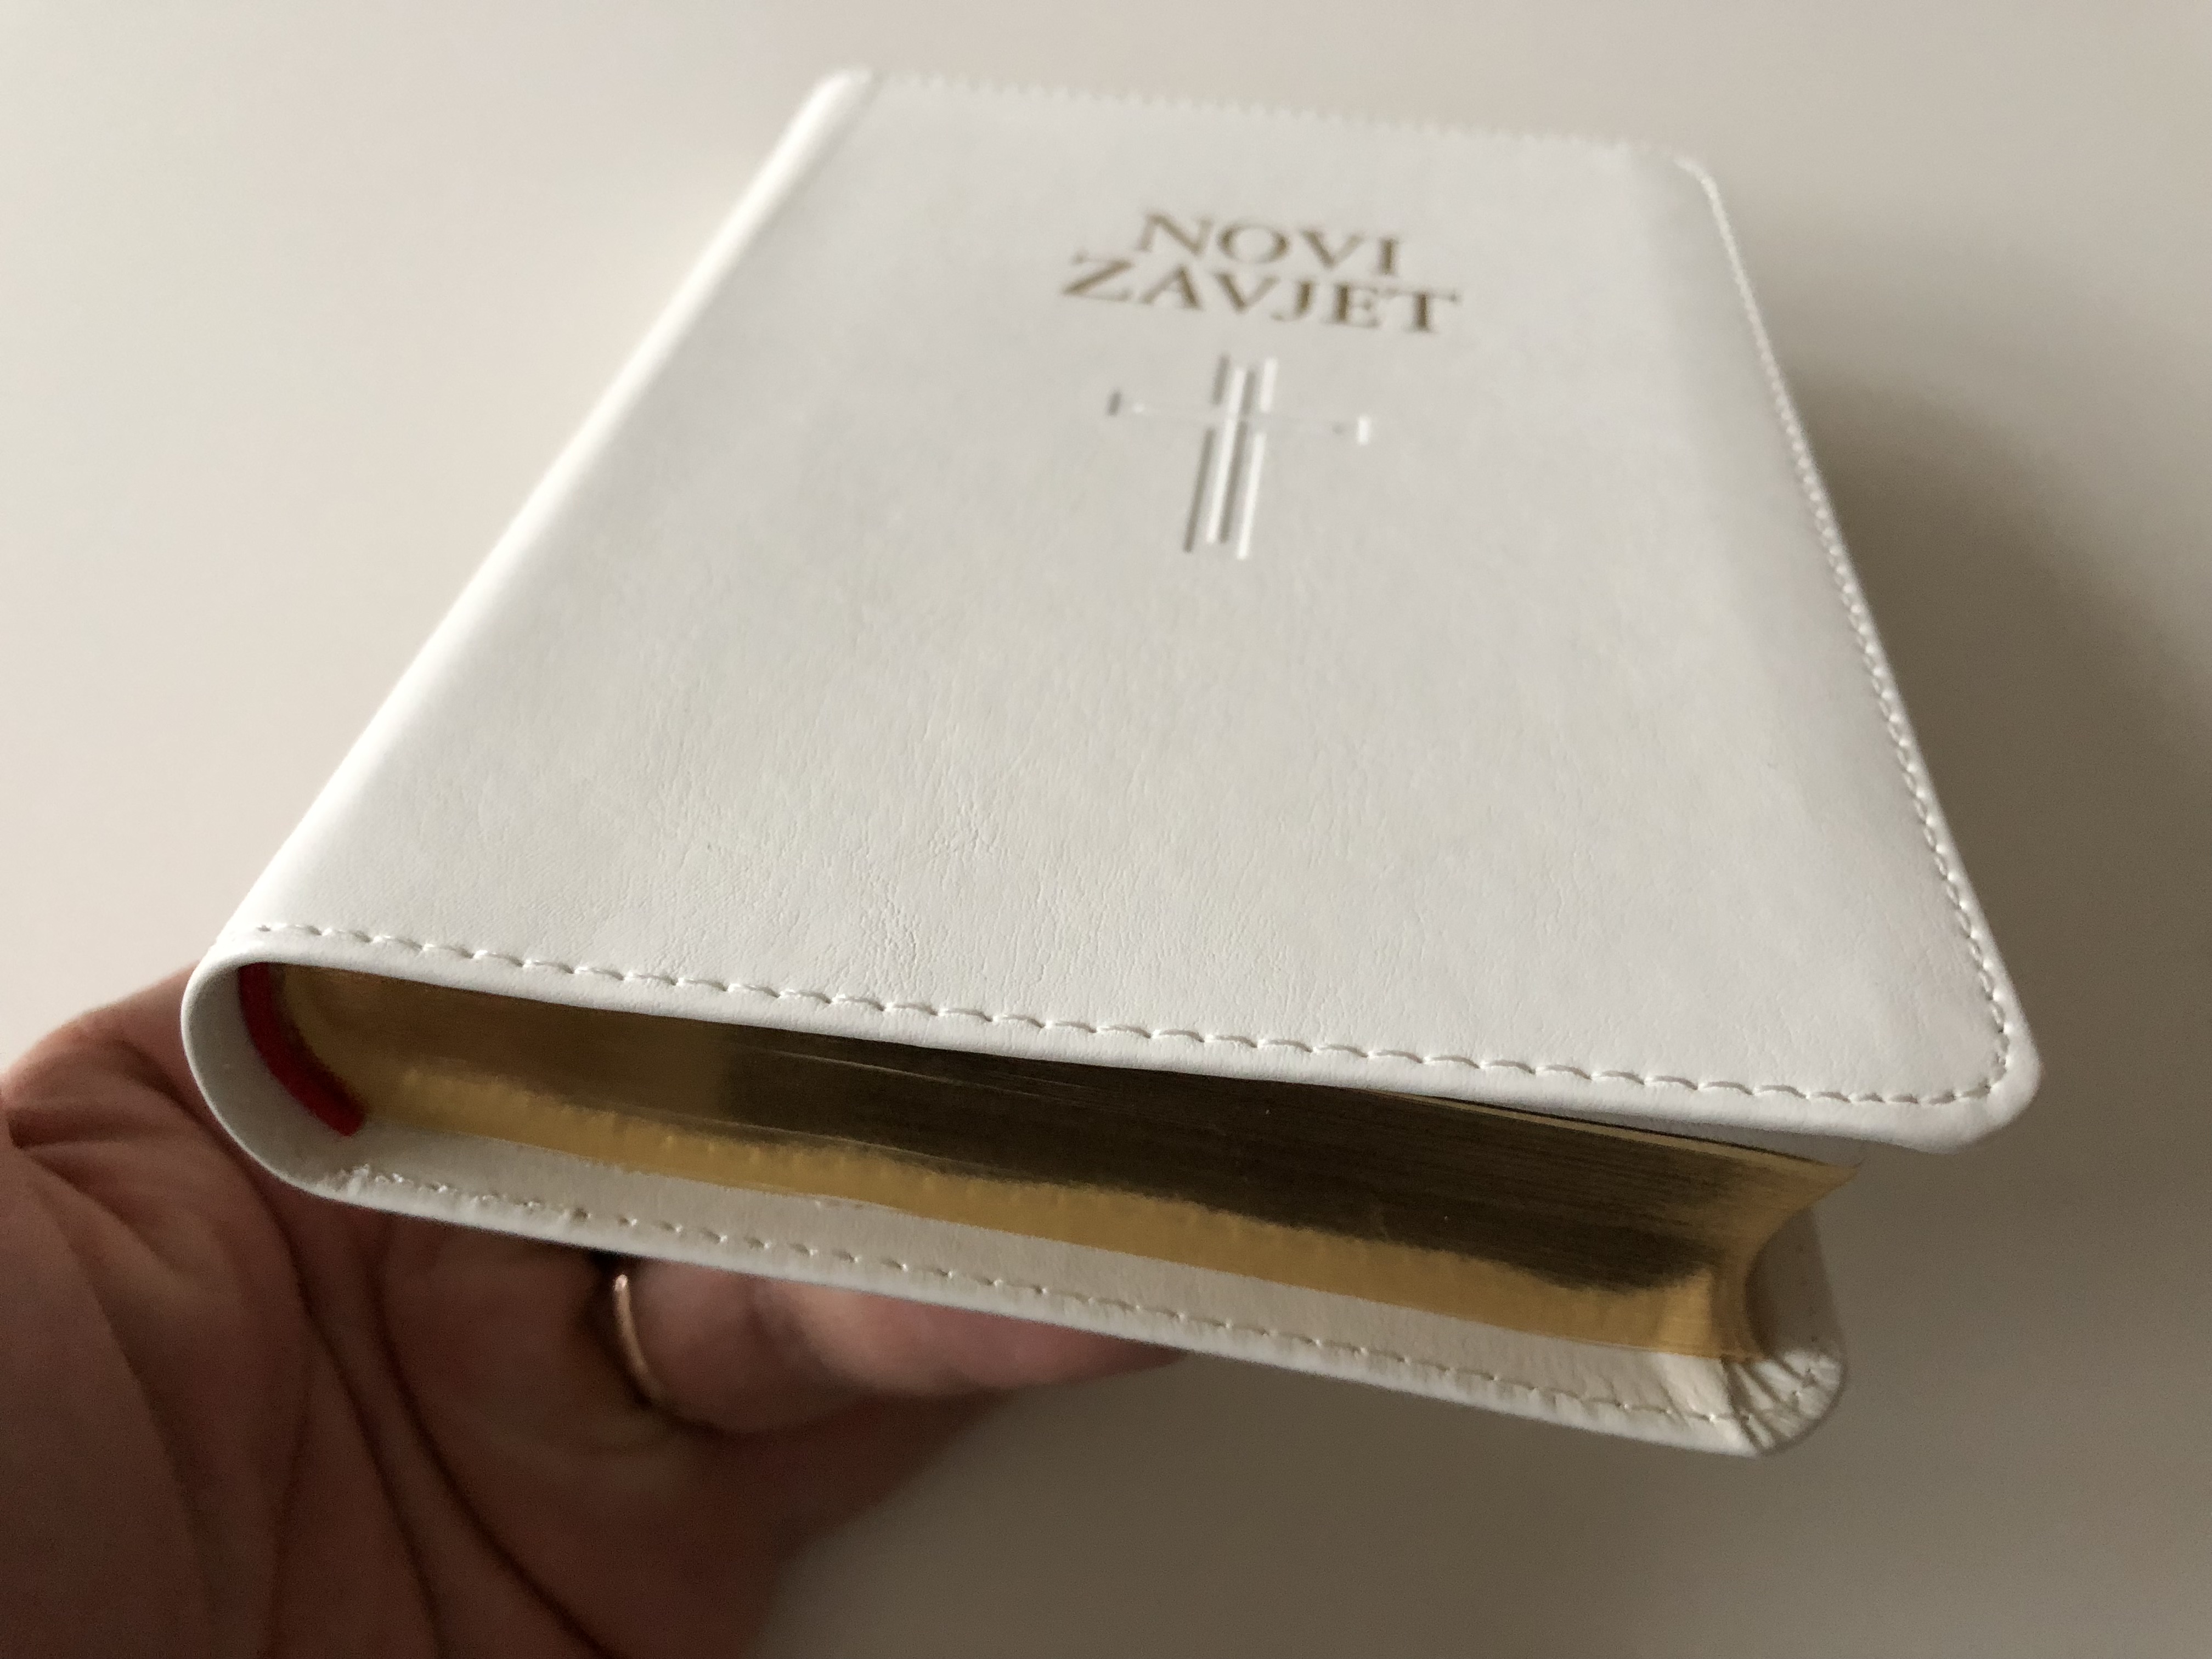 novi-zavjet-the-new-testament-in-croatian-language-leather-bound-white-golden-edges-hbd-2017-2-.jpg